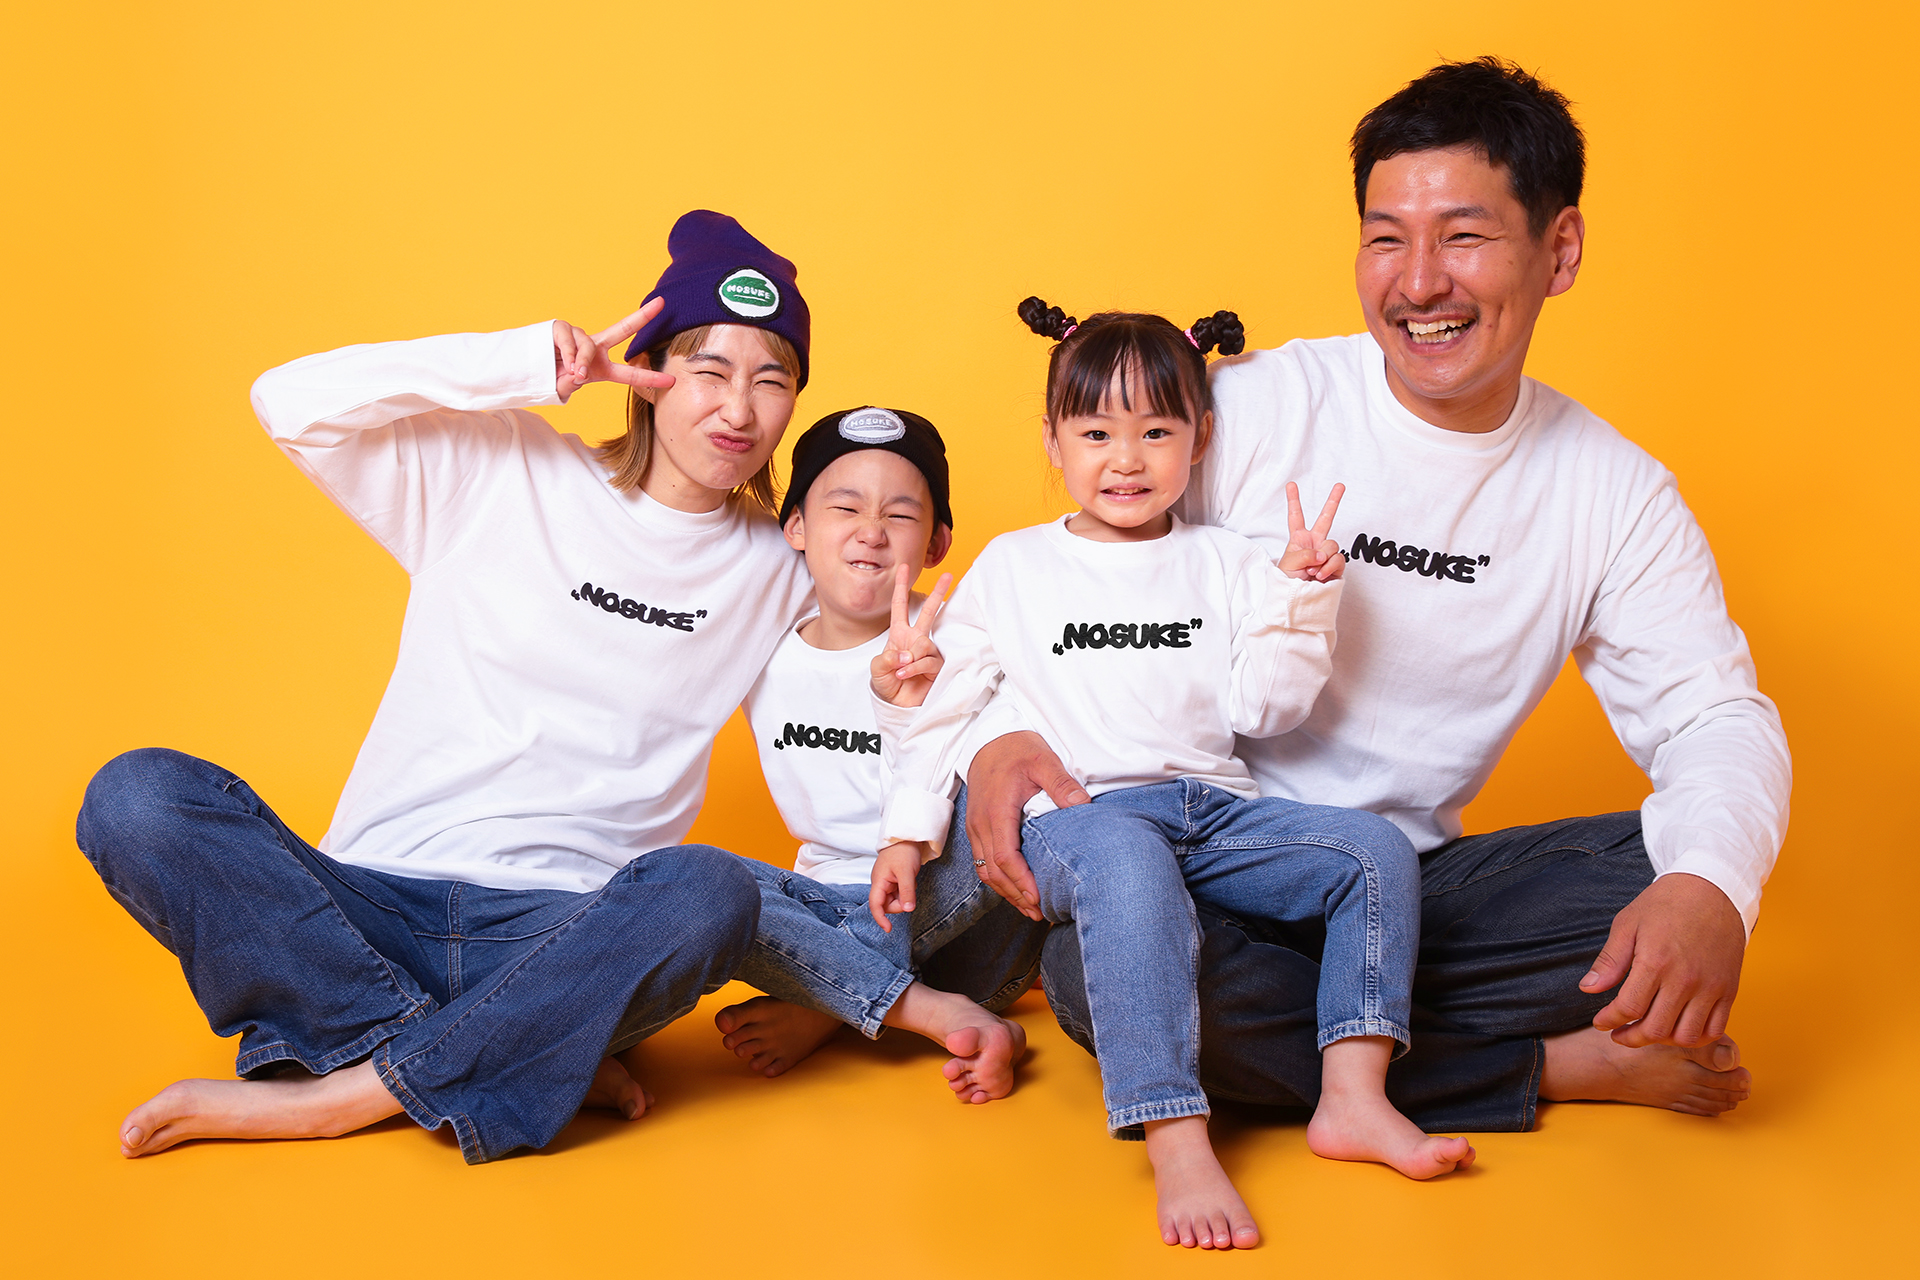 【NEW ITEM】NOSUKE Original L/S T-shirt の発売!!!